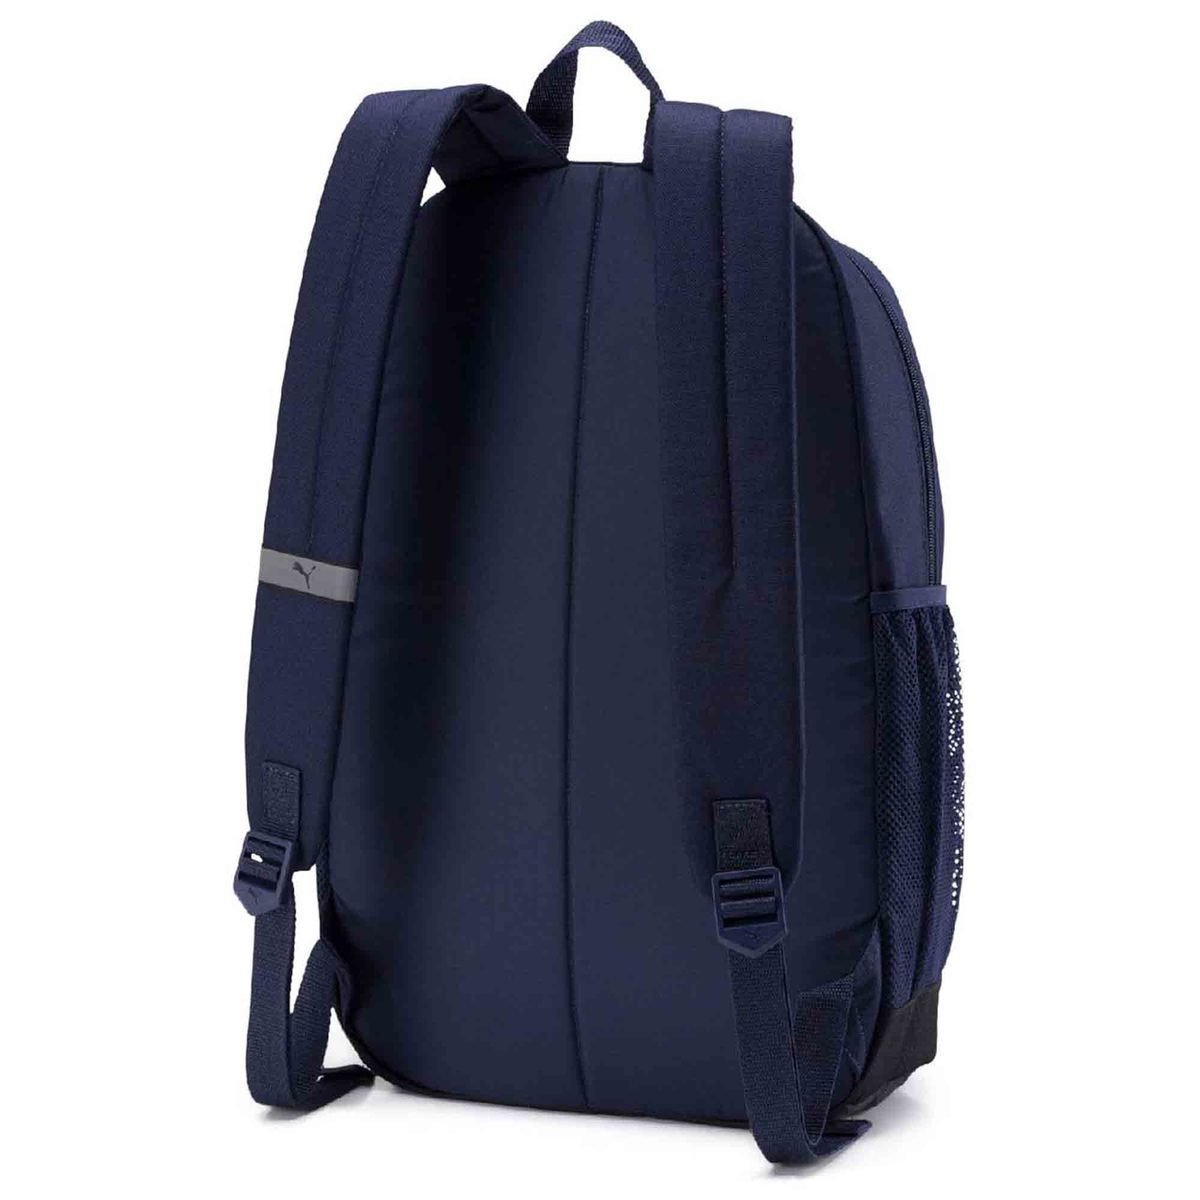 PUMA Plus Backpack II Navy Red 07574904